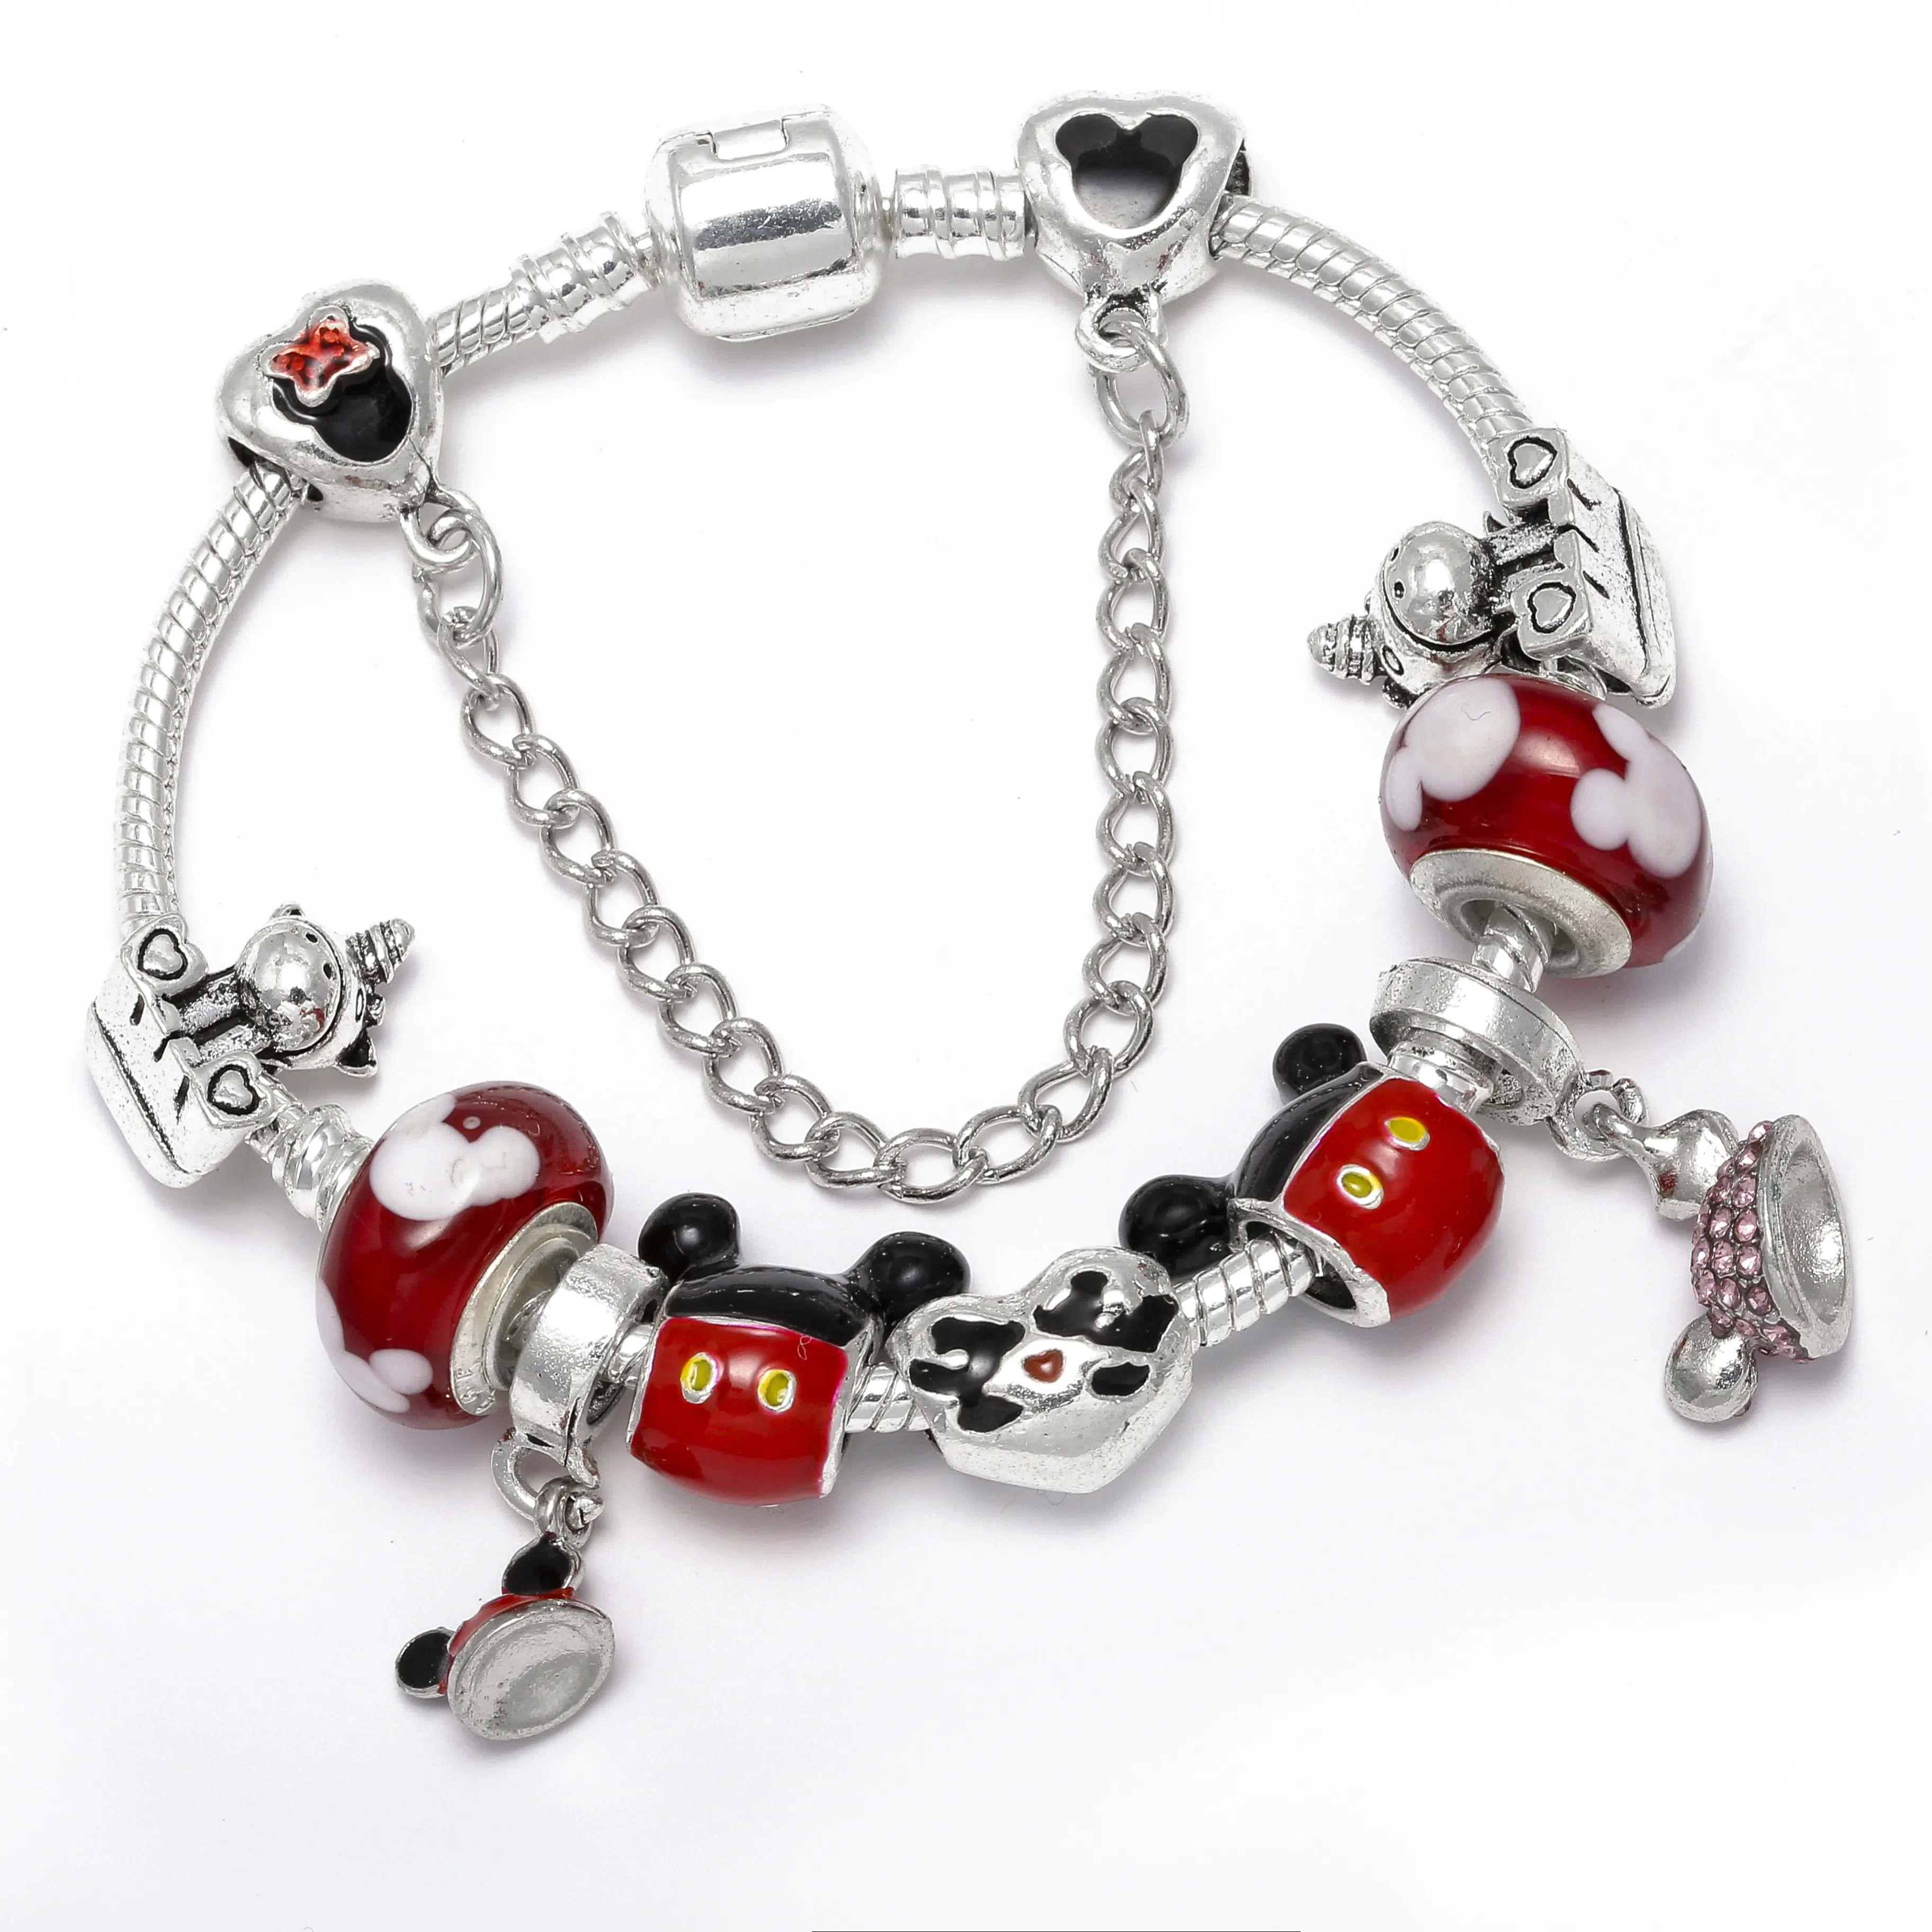 European Popular Charm Bracelet For Women Luxury Brand Crystal Beads Snake Chain Bracelets Silver Color Jewelry 2017